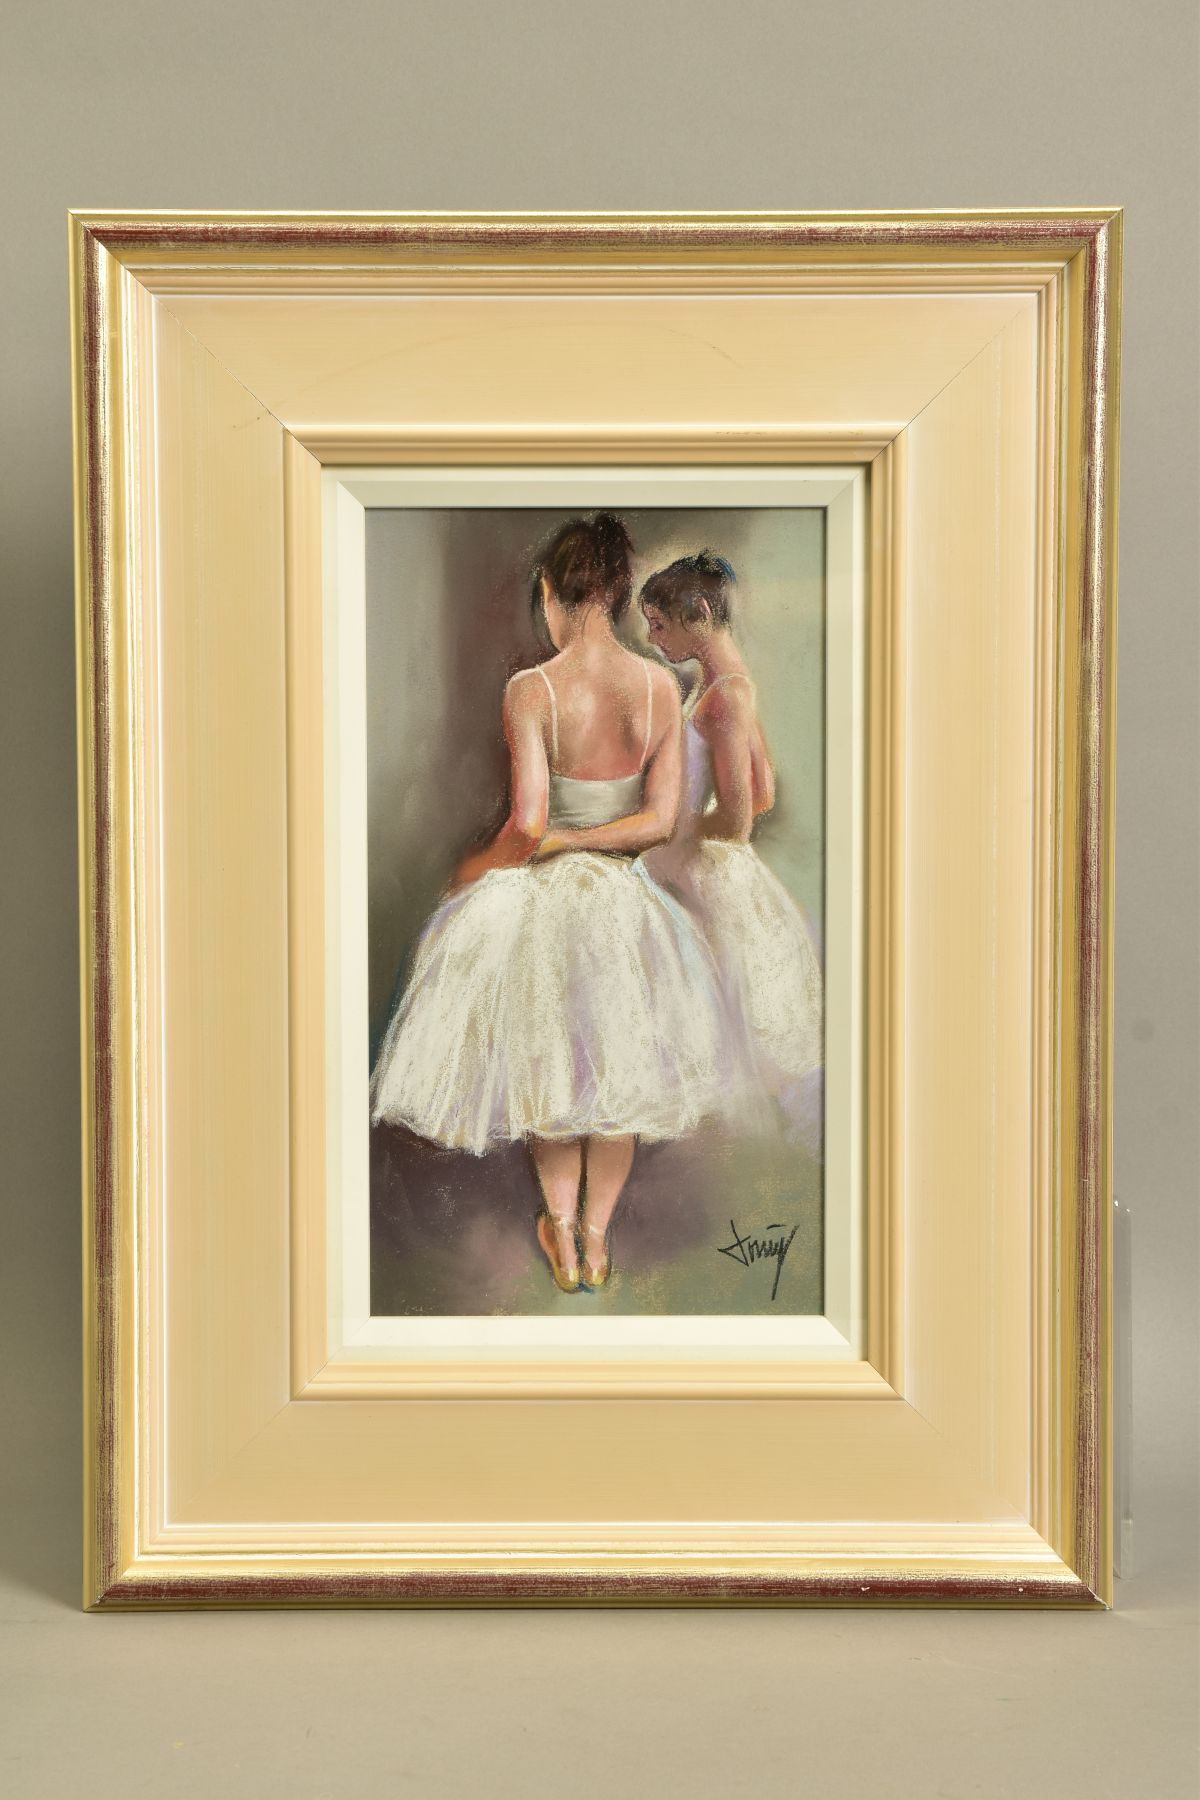 DOMINGO ALVAREZ GOMEZ (SPAIN 1942) 'BELLEZA DE BALLET II', a study of a female ballet dancer, signed